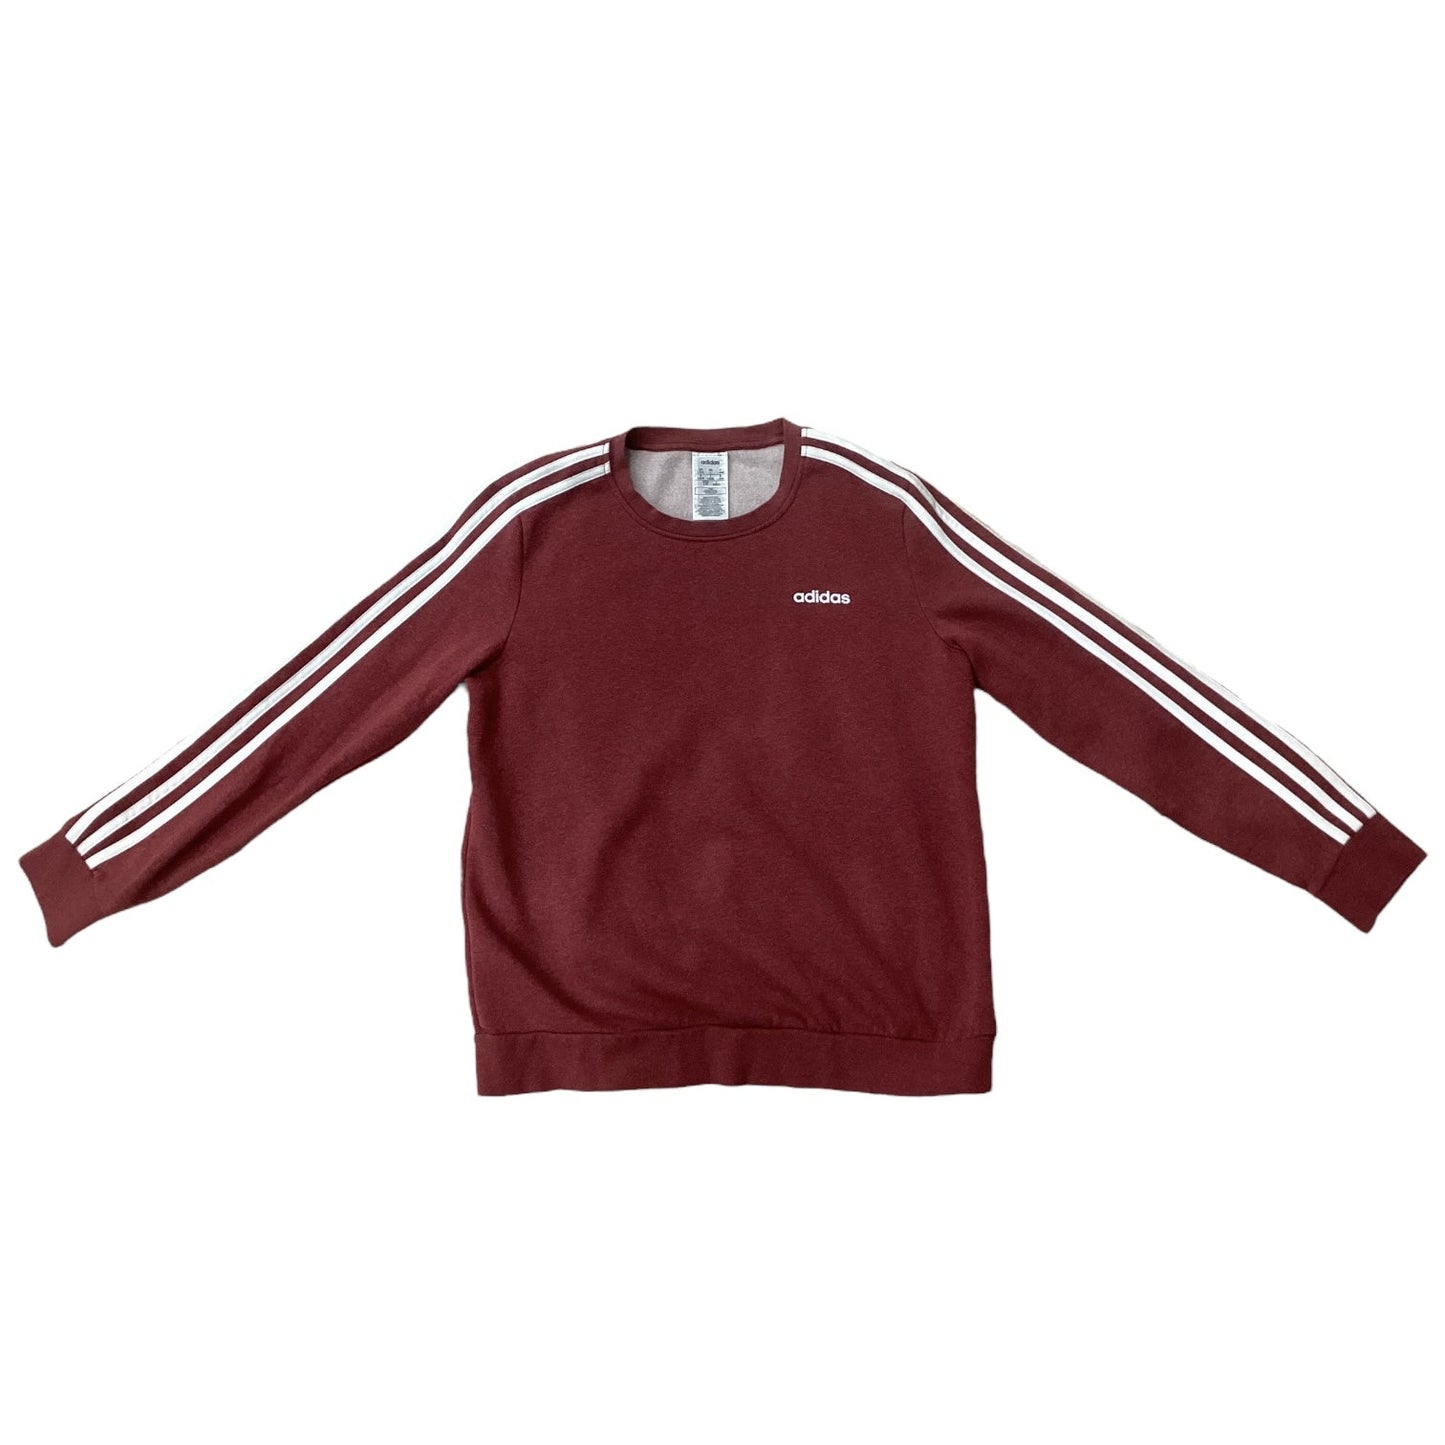 Red Athletic Sweatshirt Crewneck Adidas, Size L